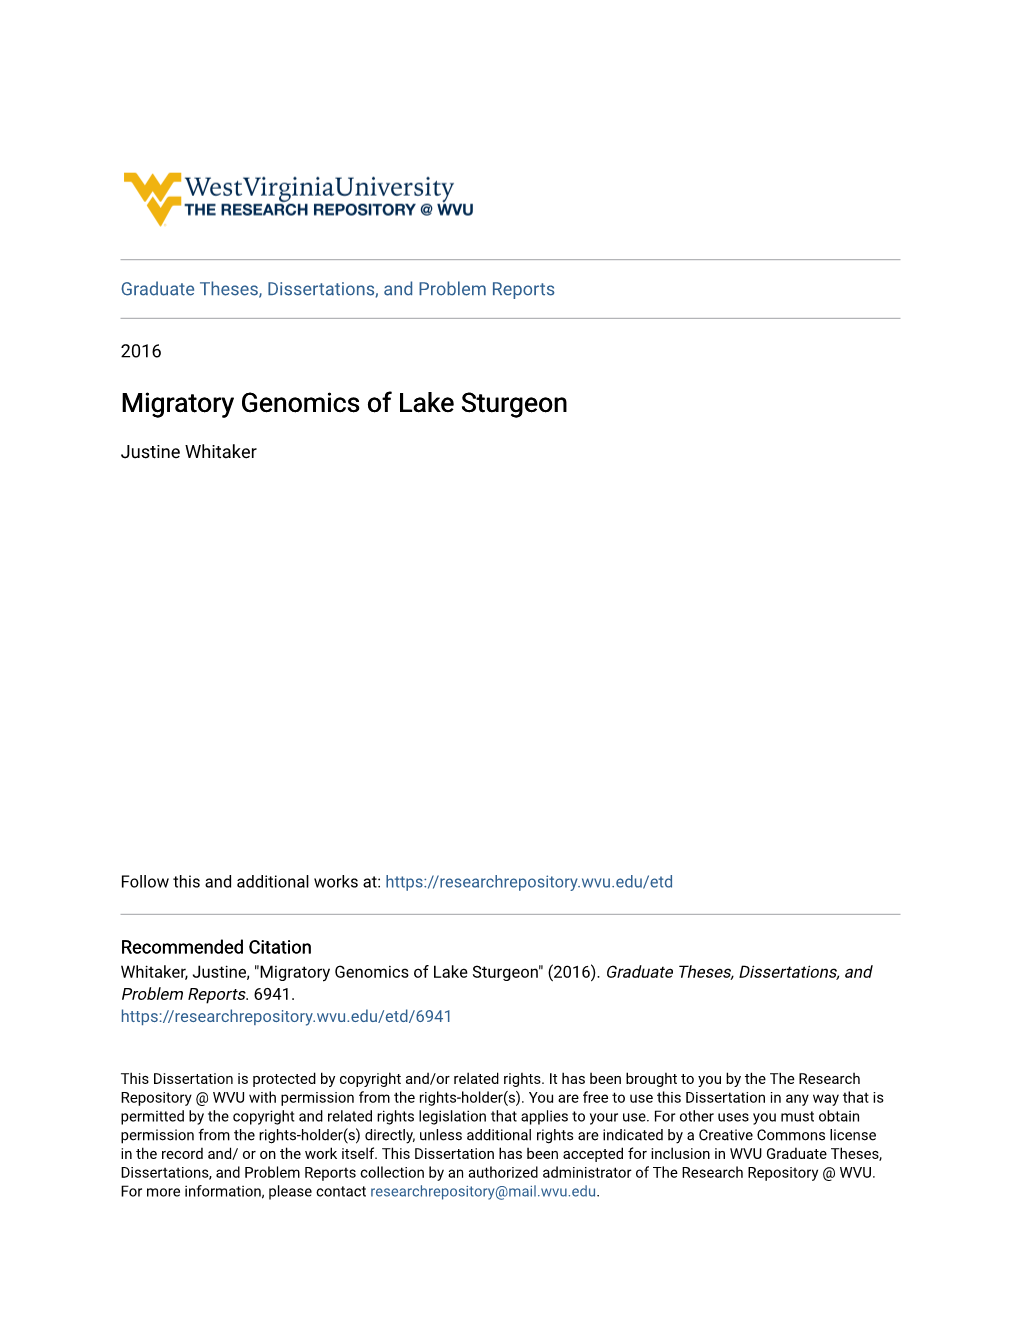 Migratory Genomics of Lake Sturgeon